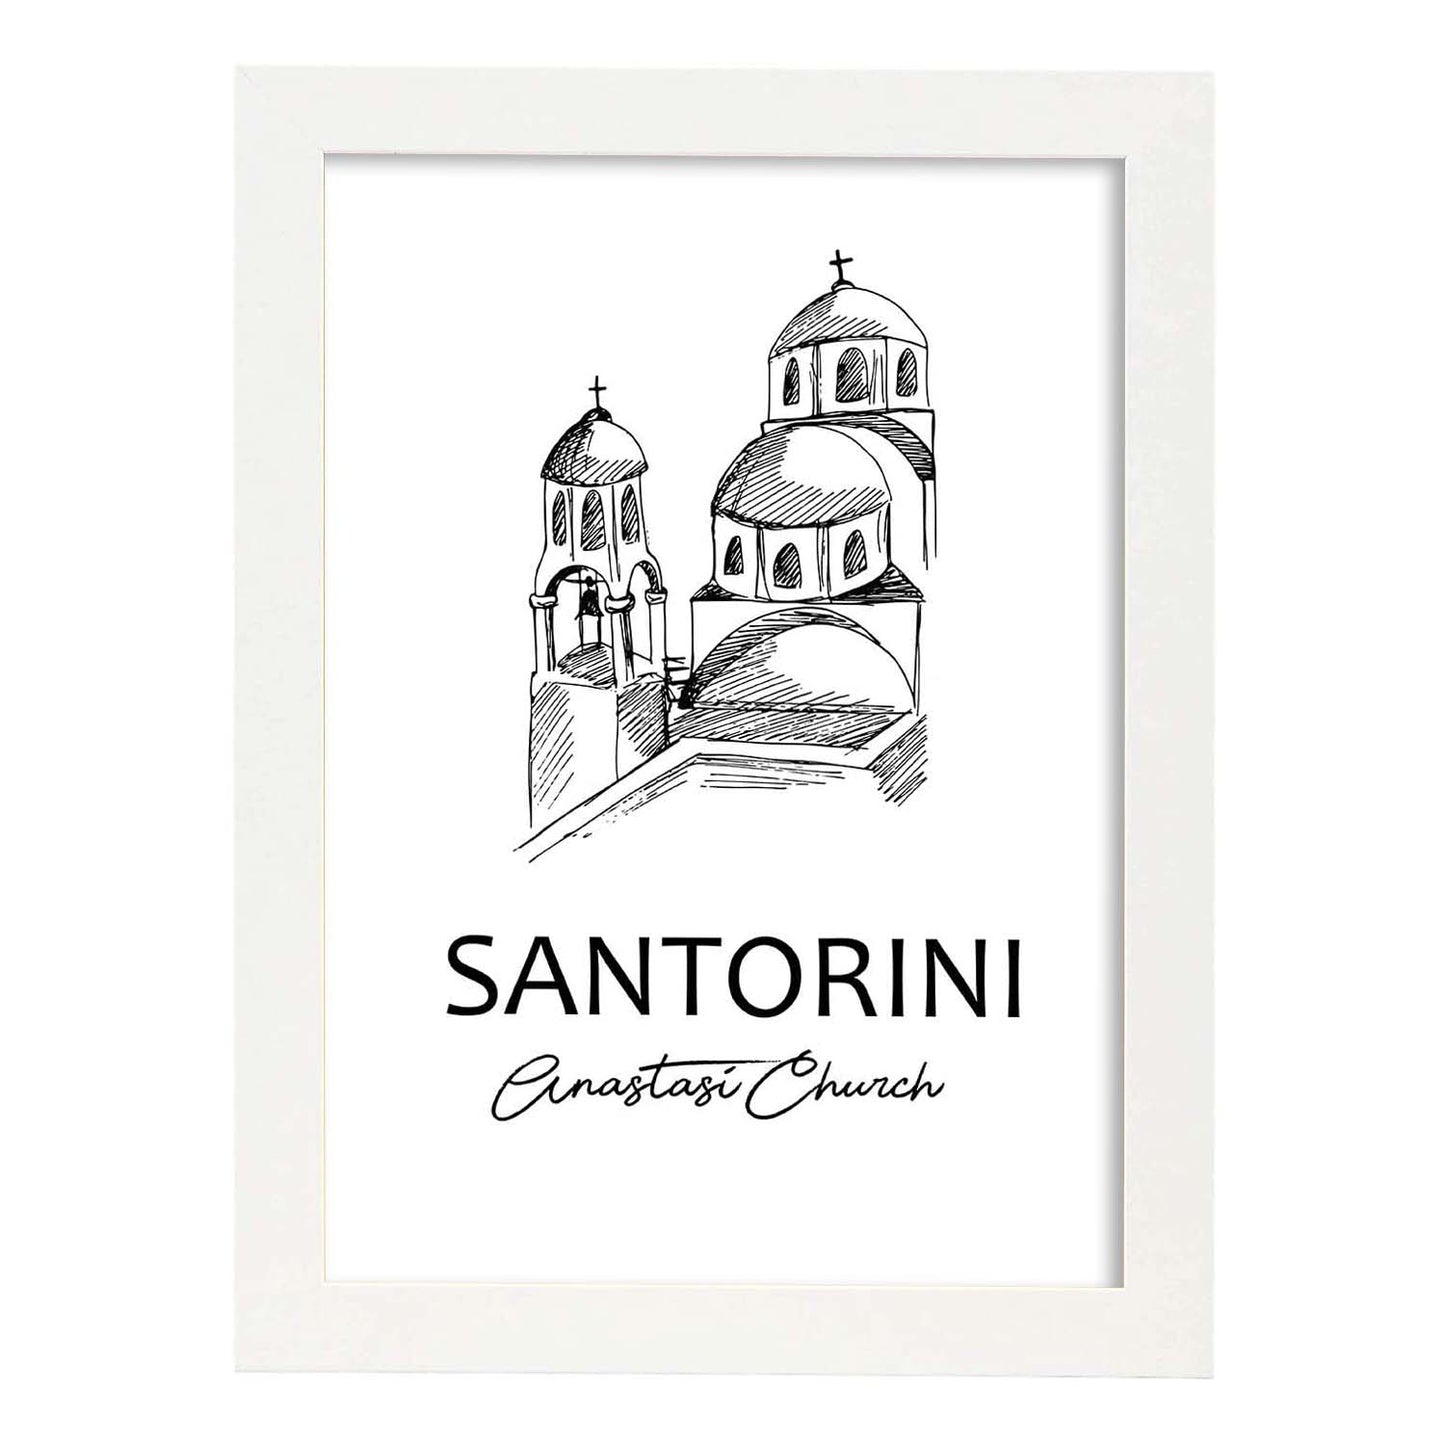 Poster de Santorini - Iglesia Anastasi. Láminas con monumentos de ciudades.-Artwork-Nacnic-A3-Marco Blanco-Nacnic Estudio SL